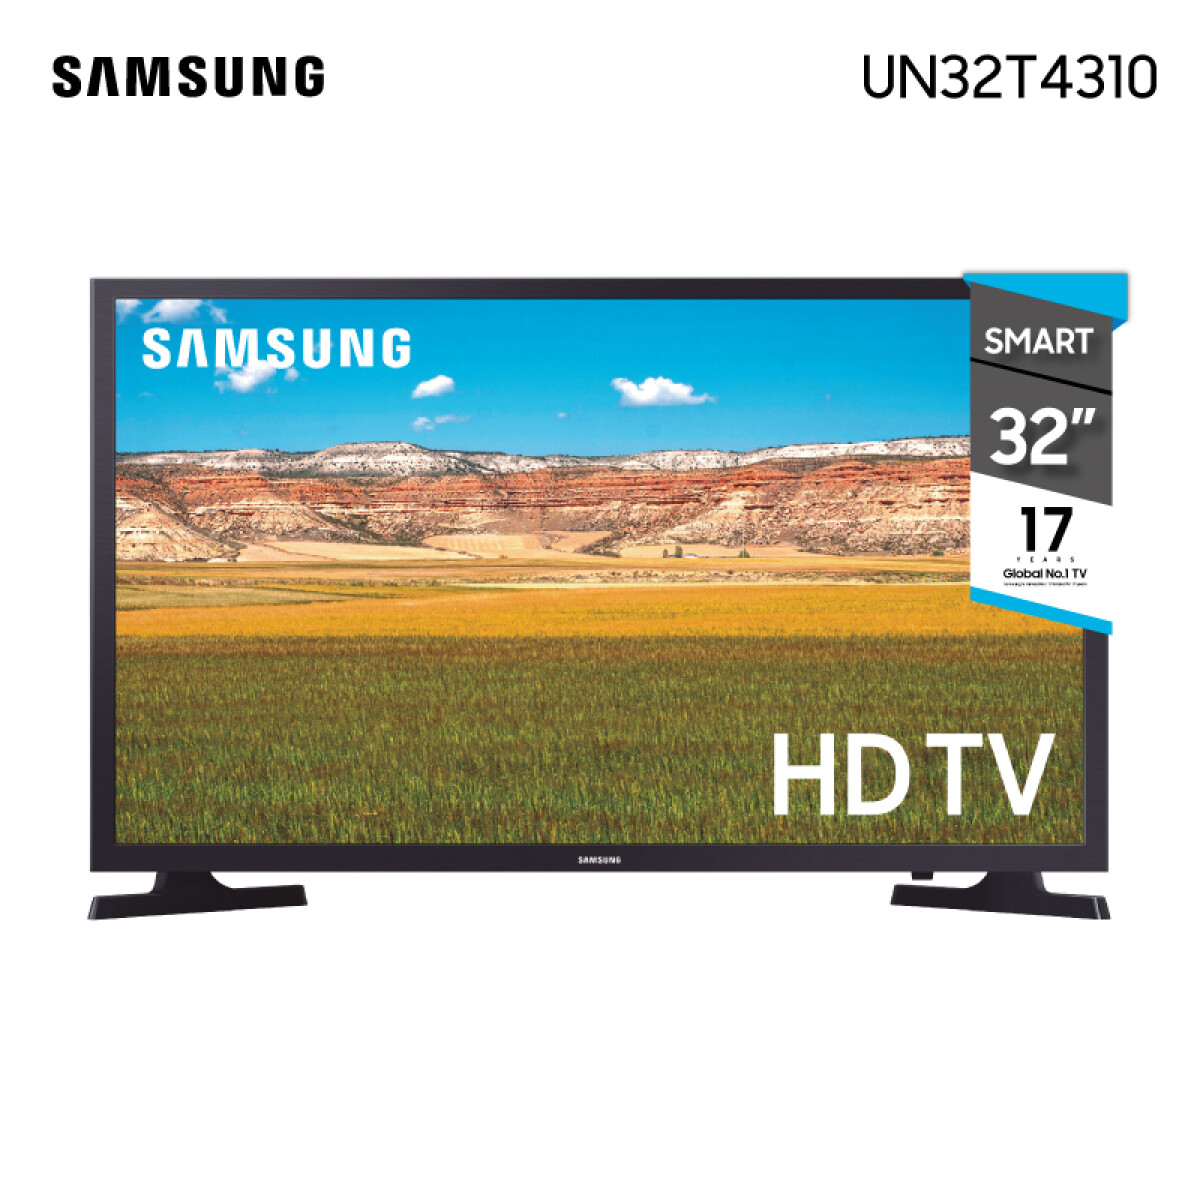 Smart Tv Samsung UN32T4310 32 Hd Led - 001 